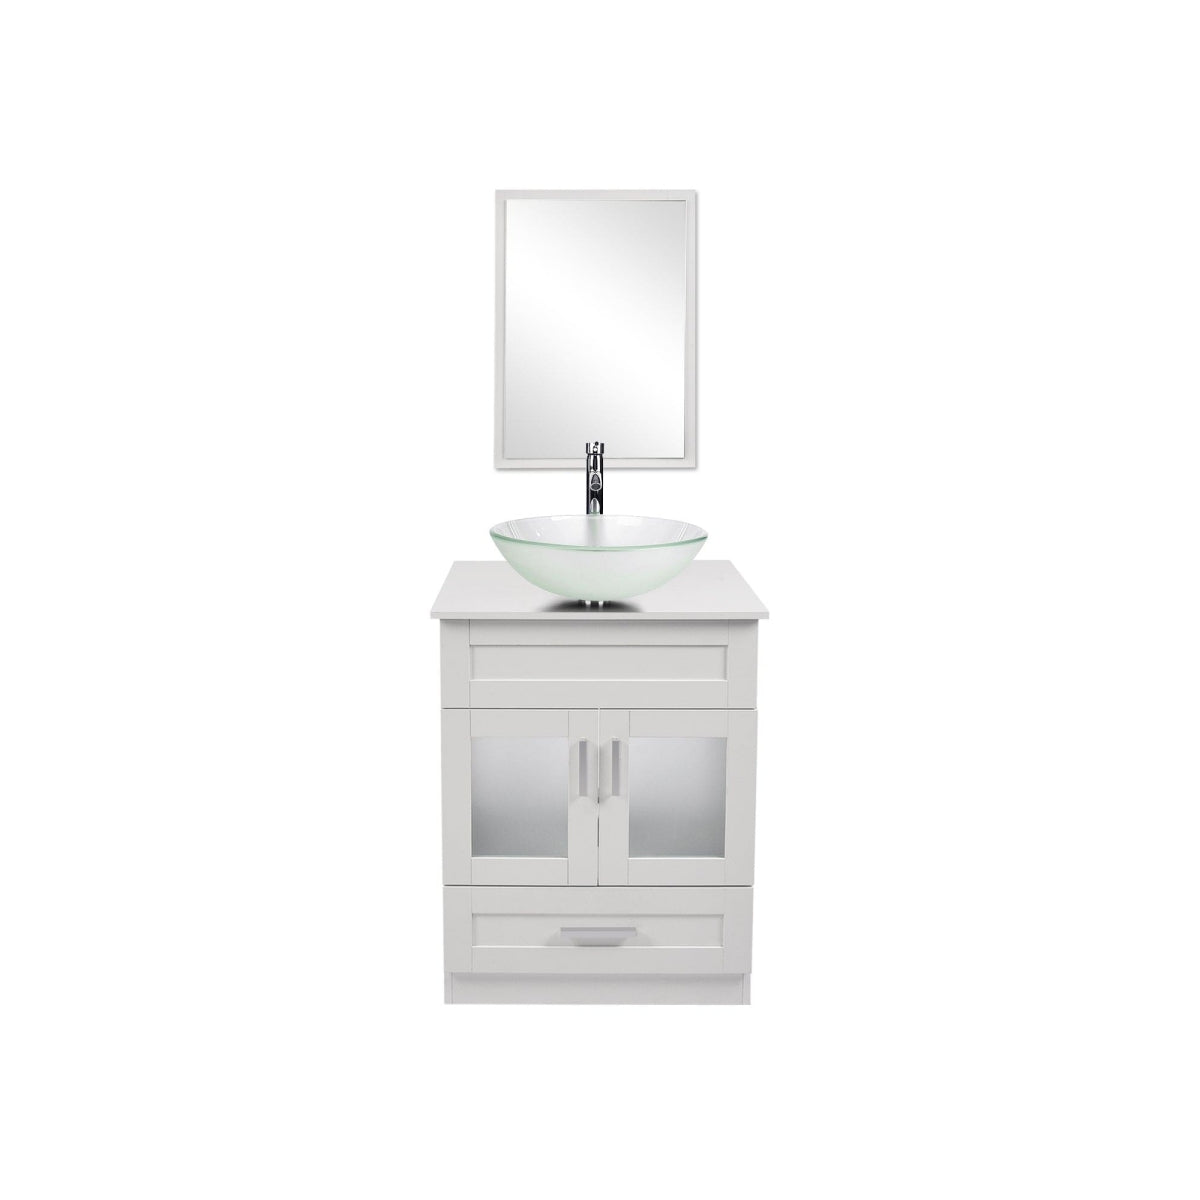 Elecwish White Bathroom Vanity with Glass Round Sink Set BA1001-WH